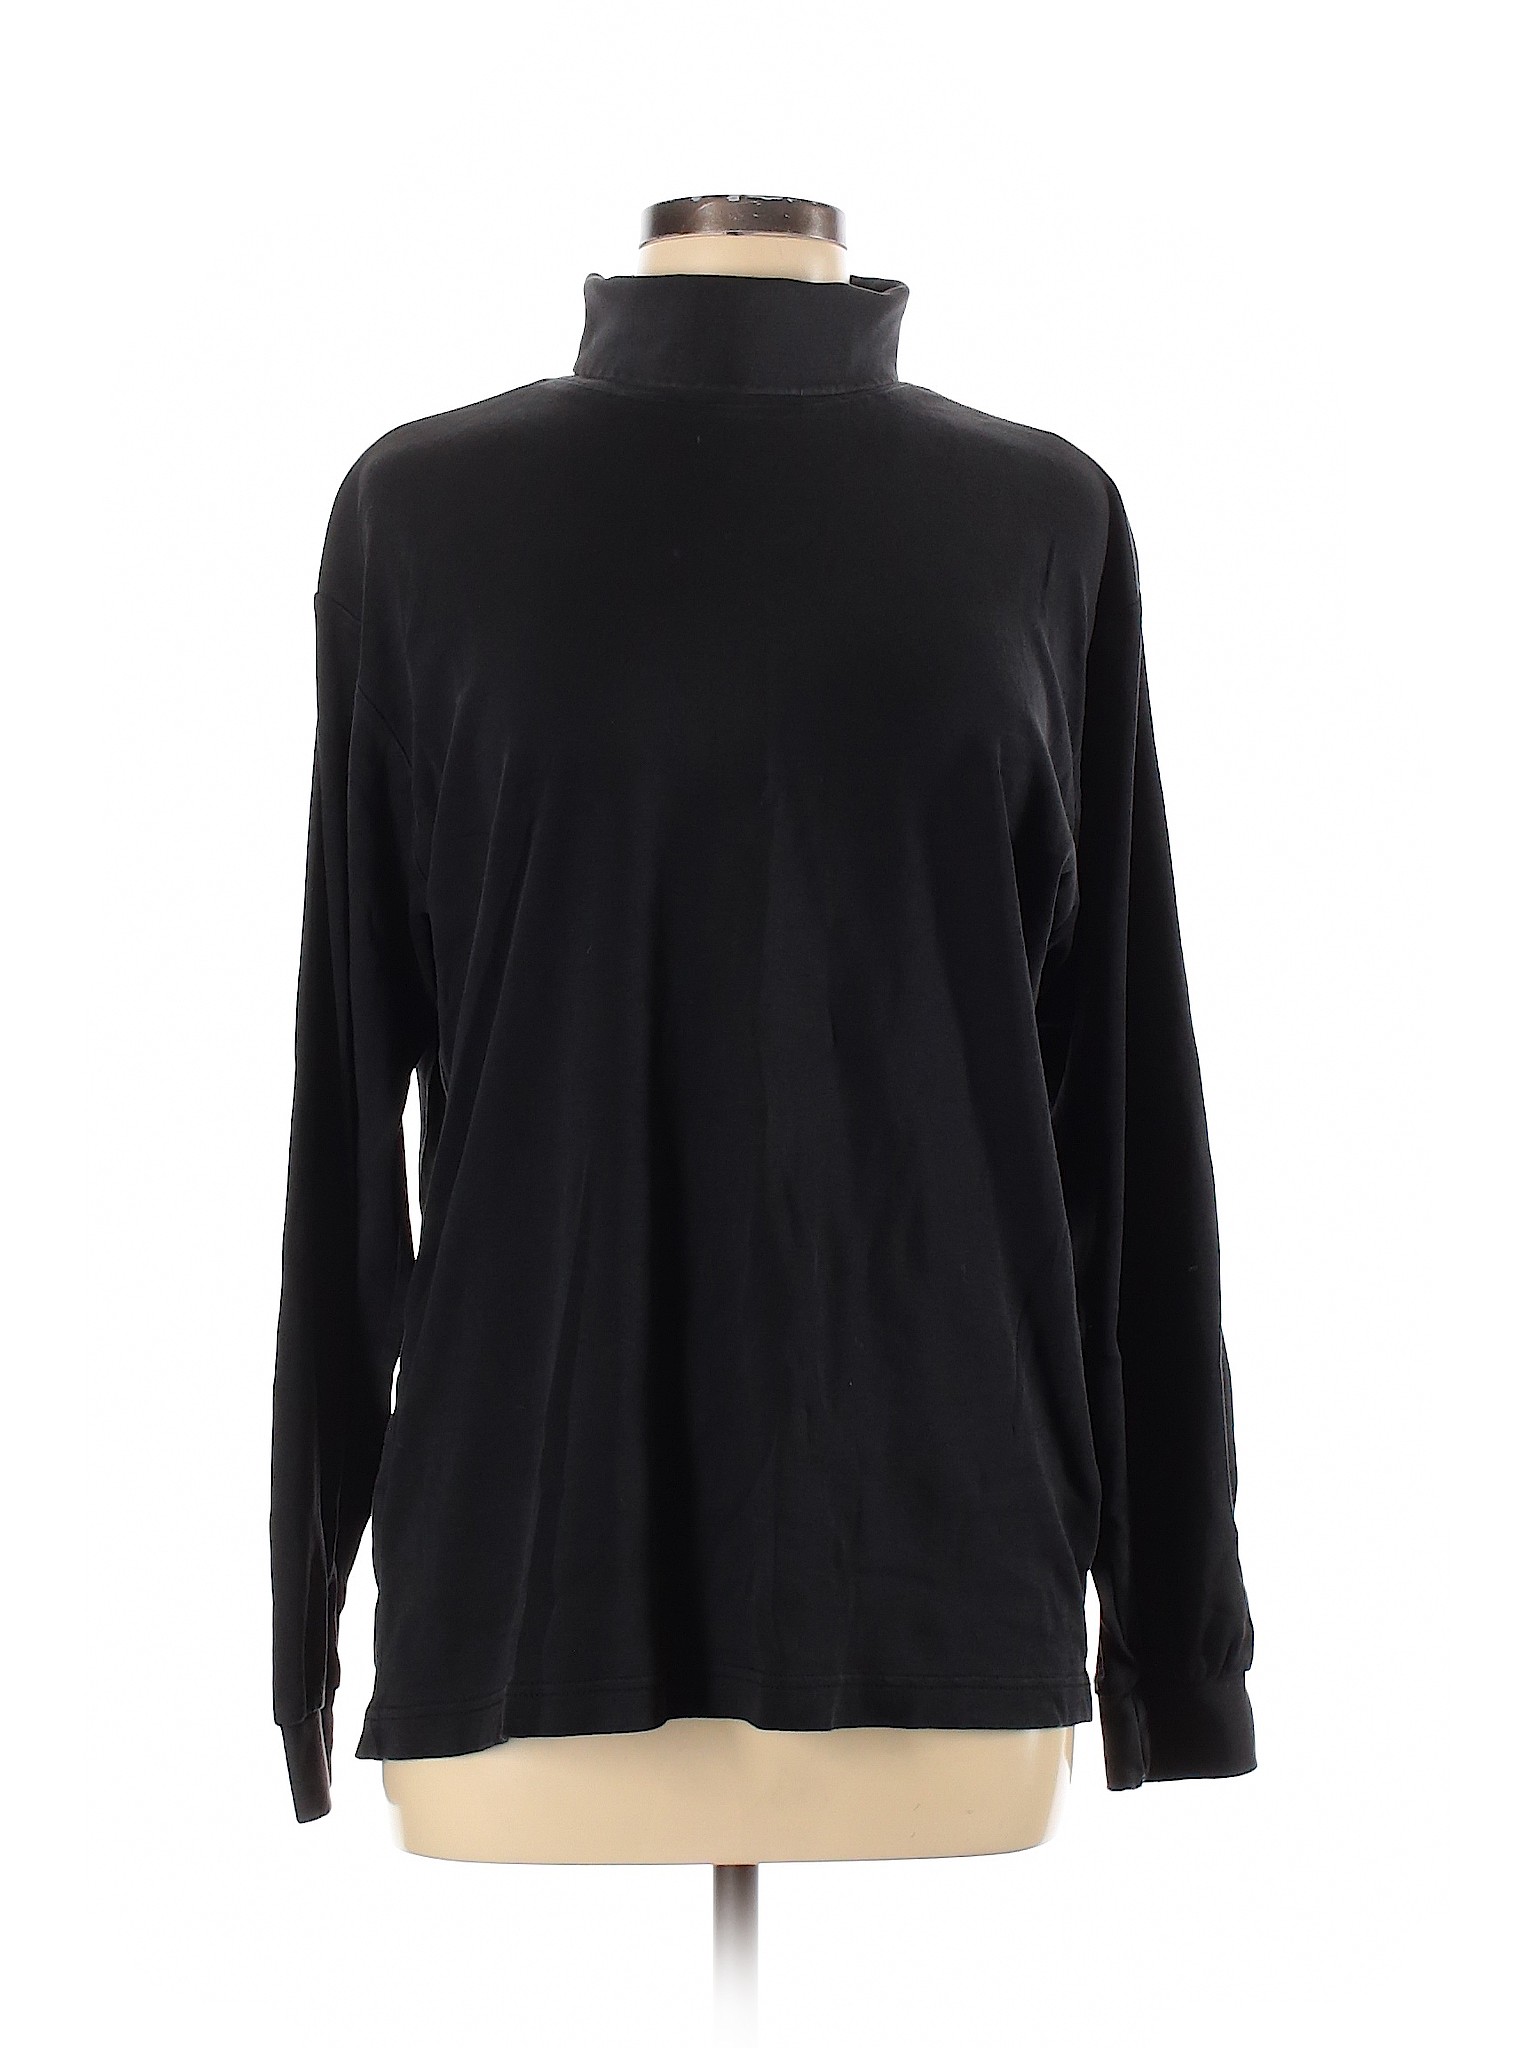 Gap Women Black Turtleneck Sweater M | eBay